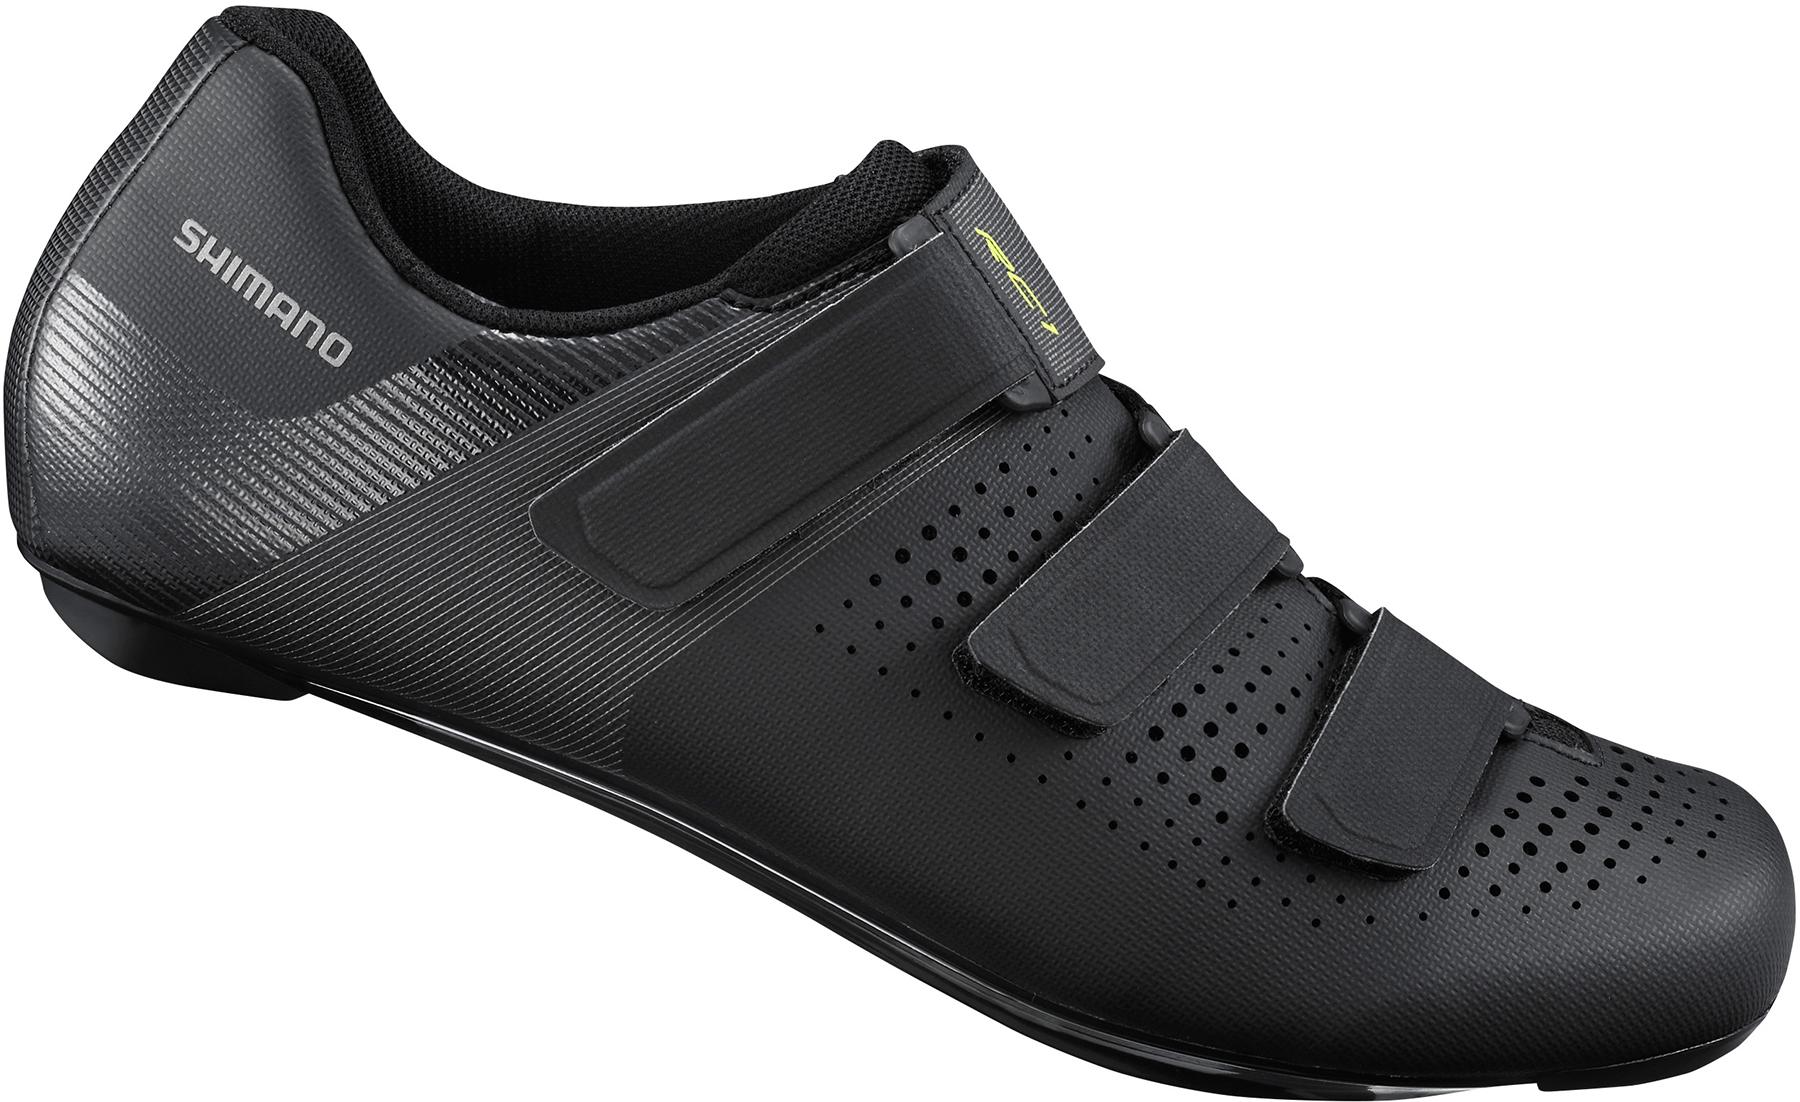 Shimano Rc100 Road Shoes - Black